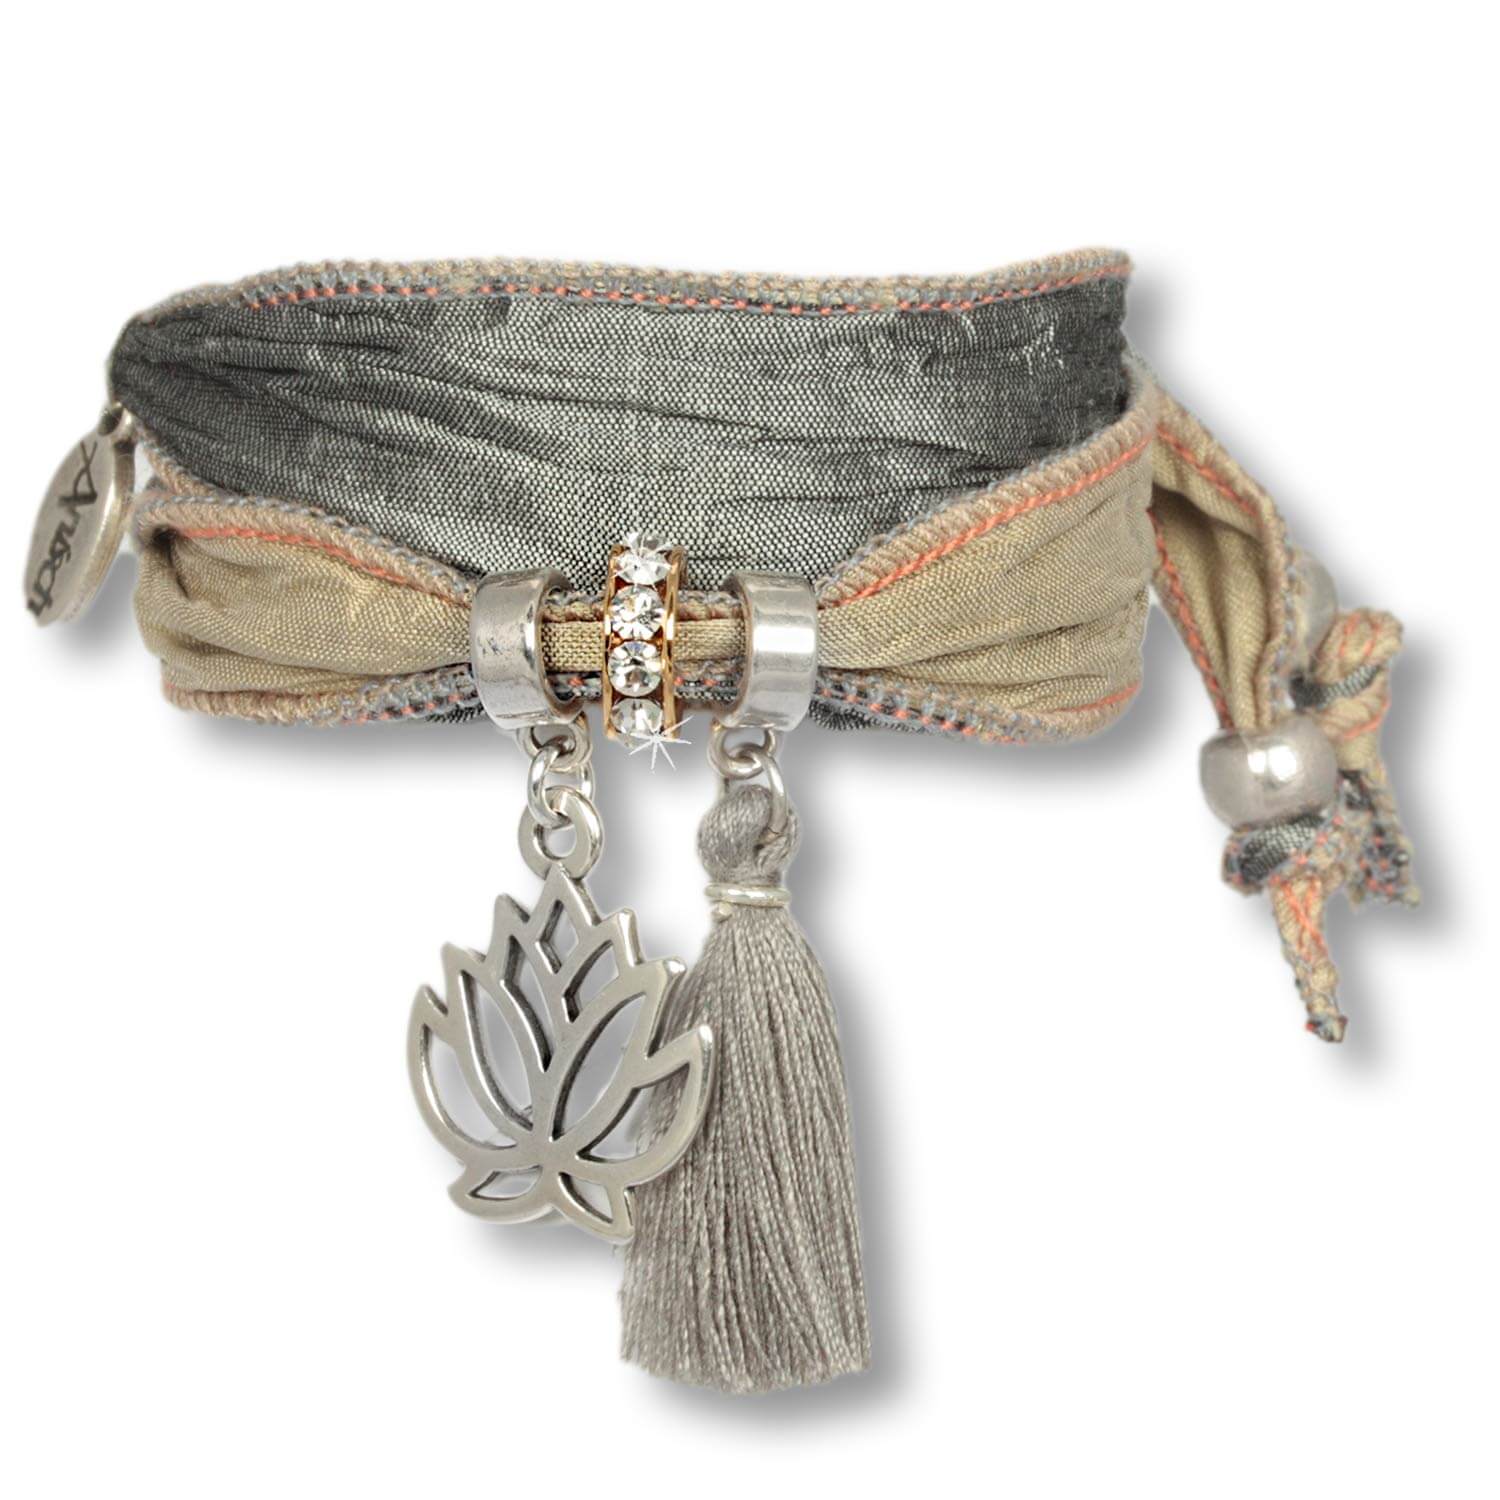 Natuer Grey - Lotus Purity Bracelet from Indian Saris